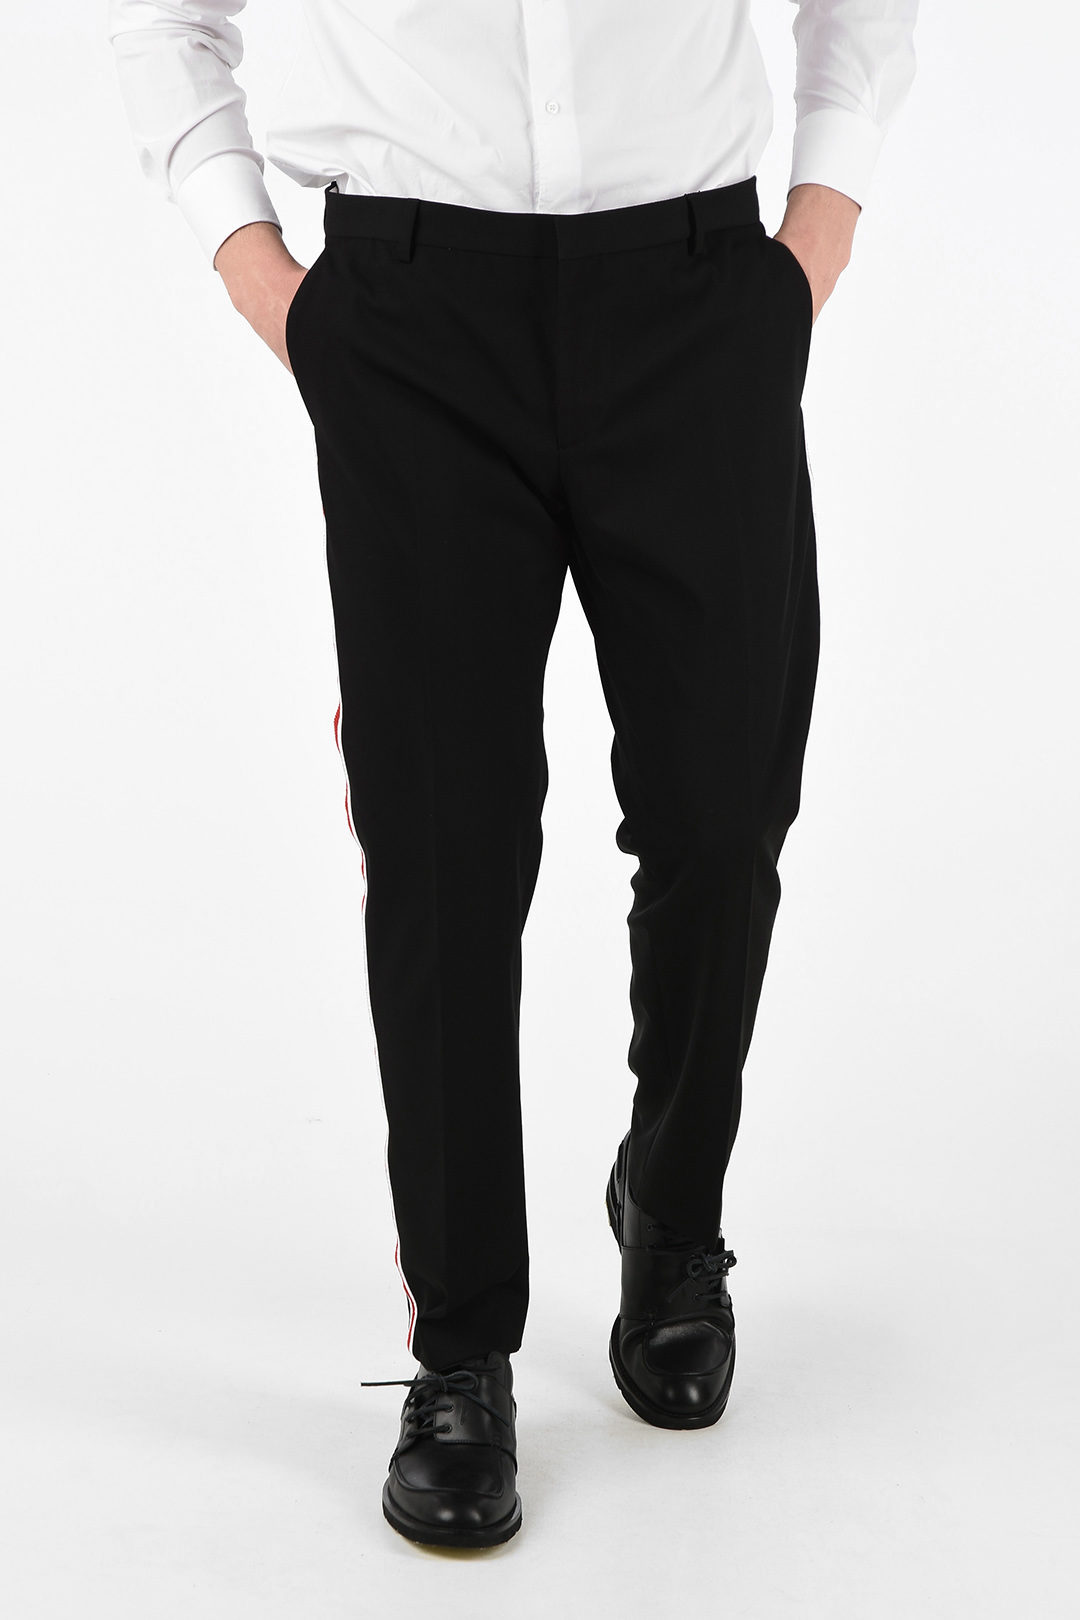 Calvin Klein Contrasting Side Band Pants men - Glamood Outlet